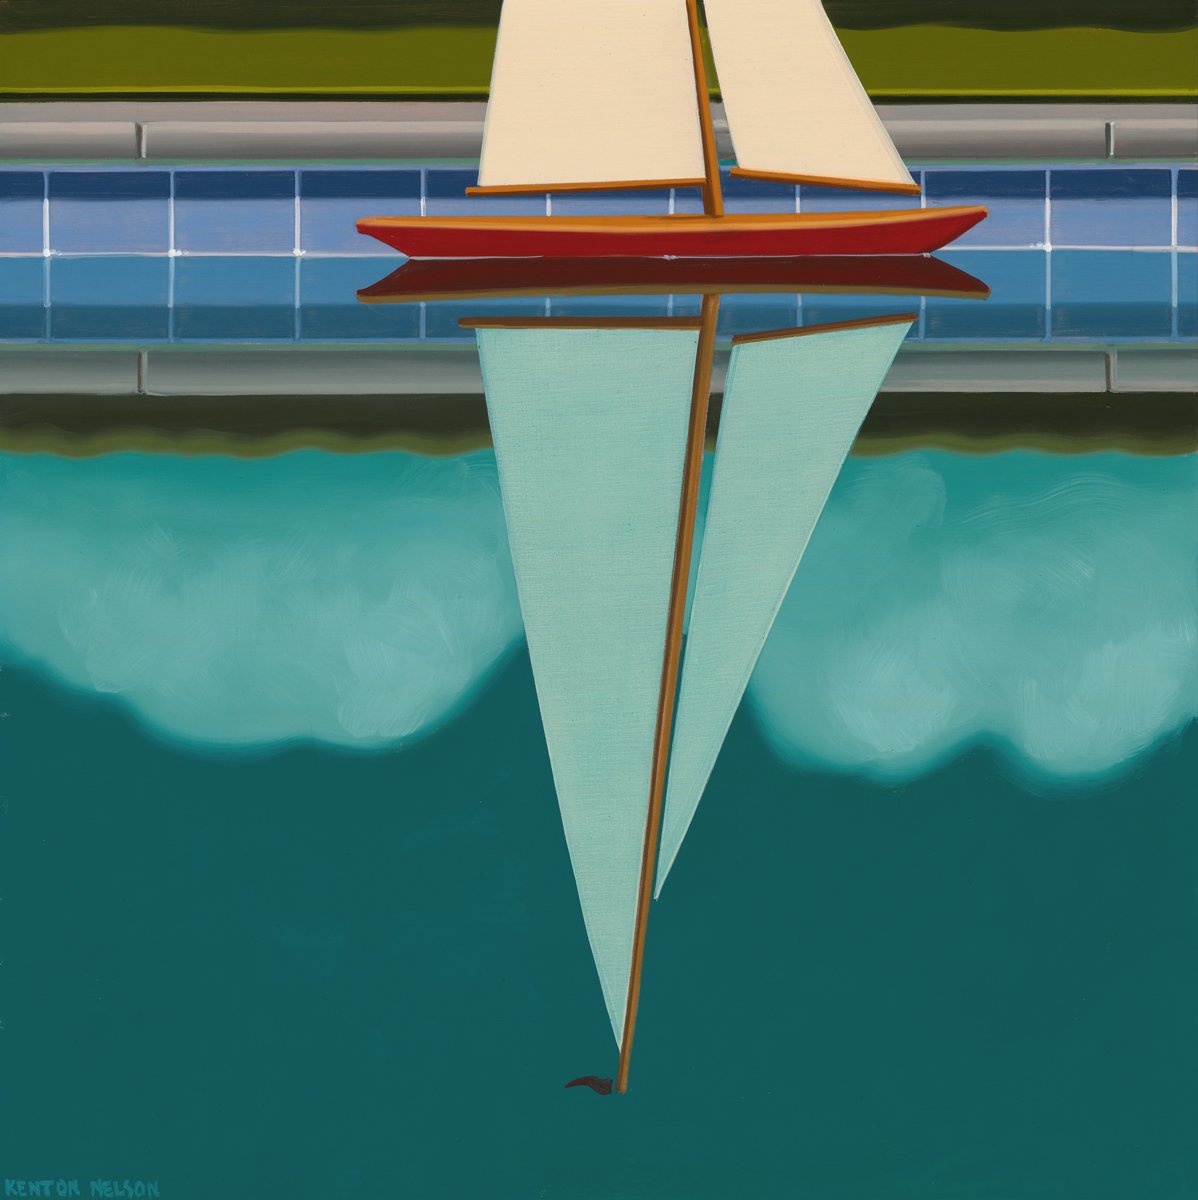 Kenton Nelson, #35 Toy Boat